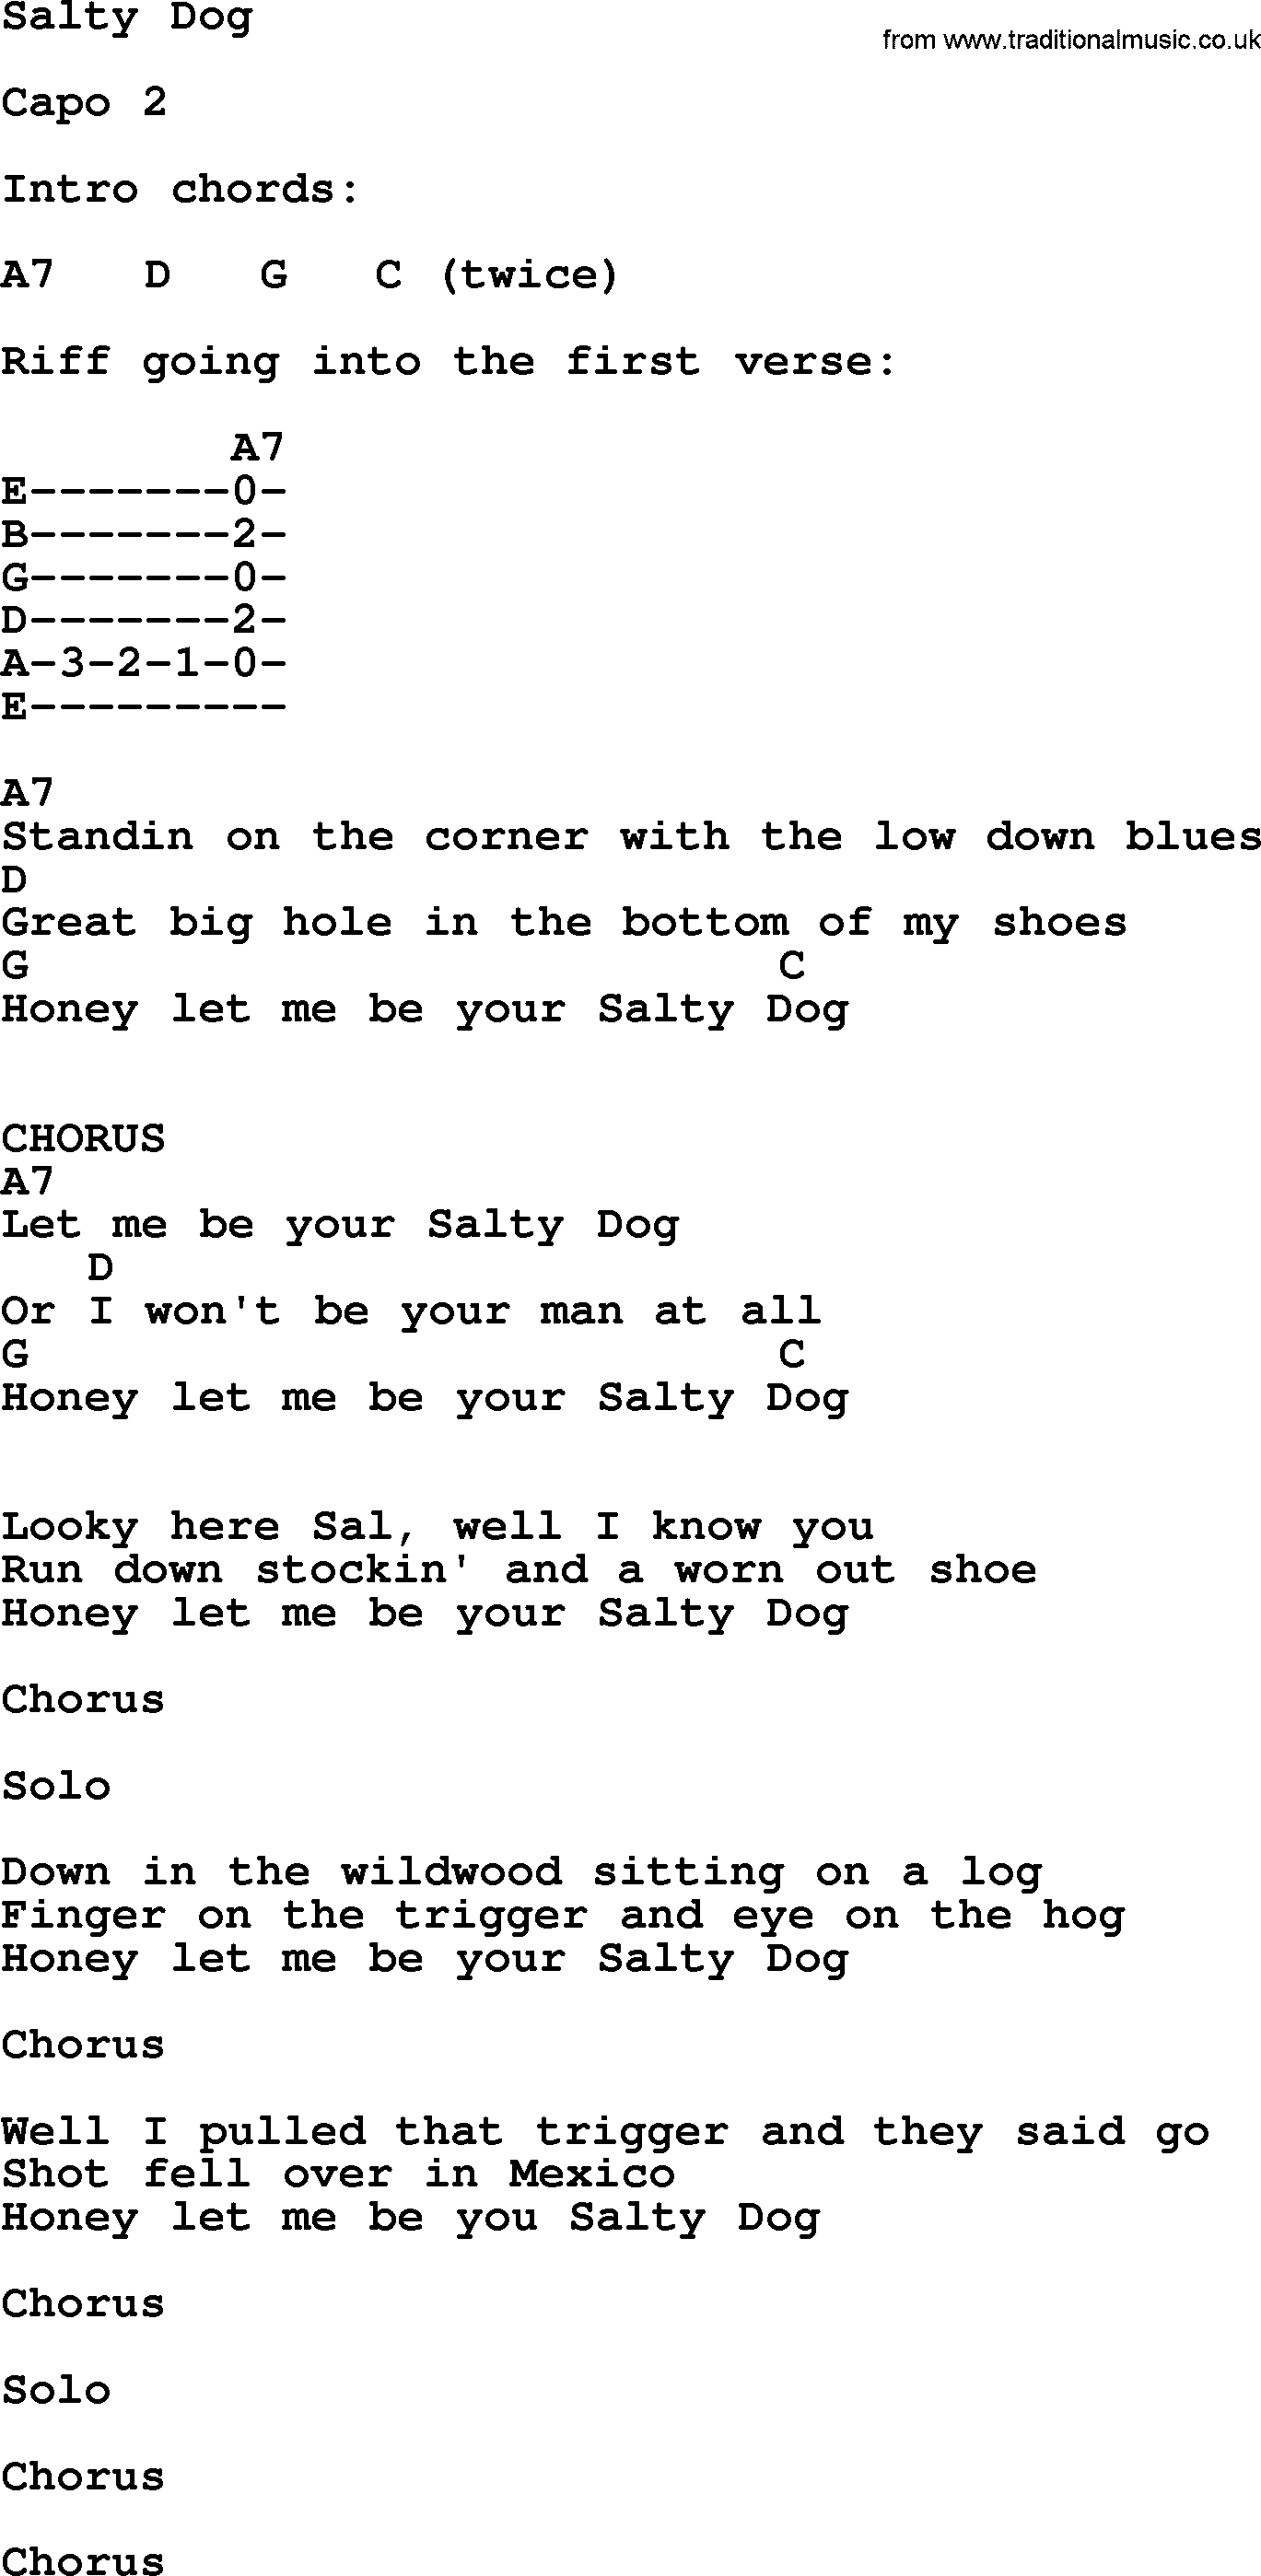 Johnny Cash song Salty Dog, lyrics and chords